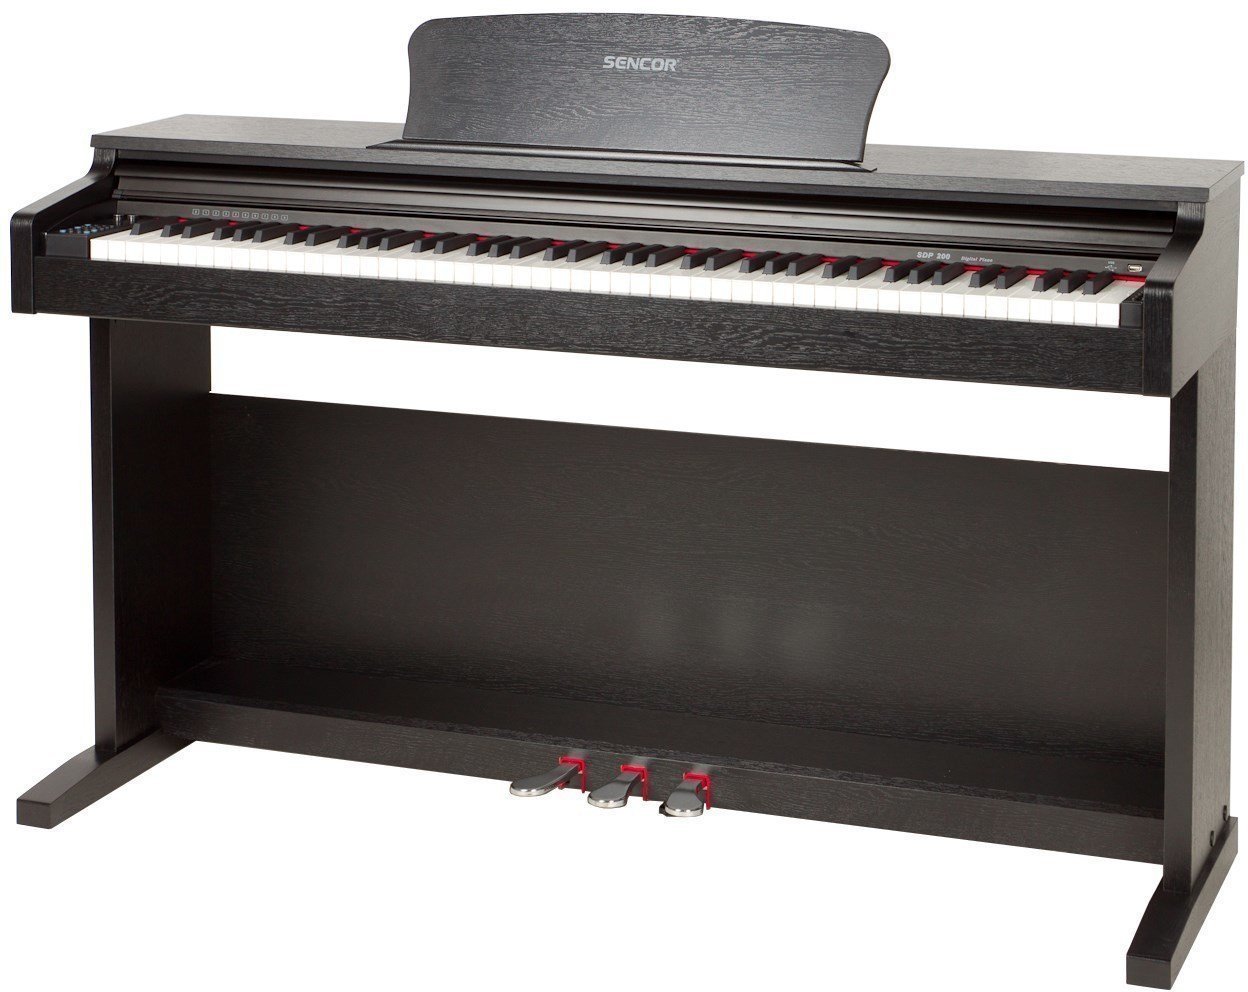 Digital Piano SENCOR SDP 200 Black Digital Piano